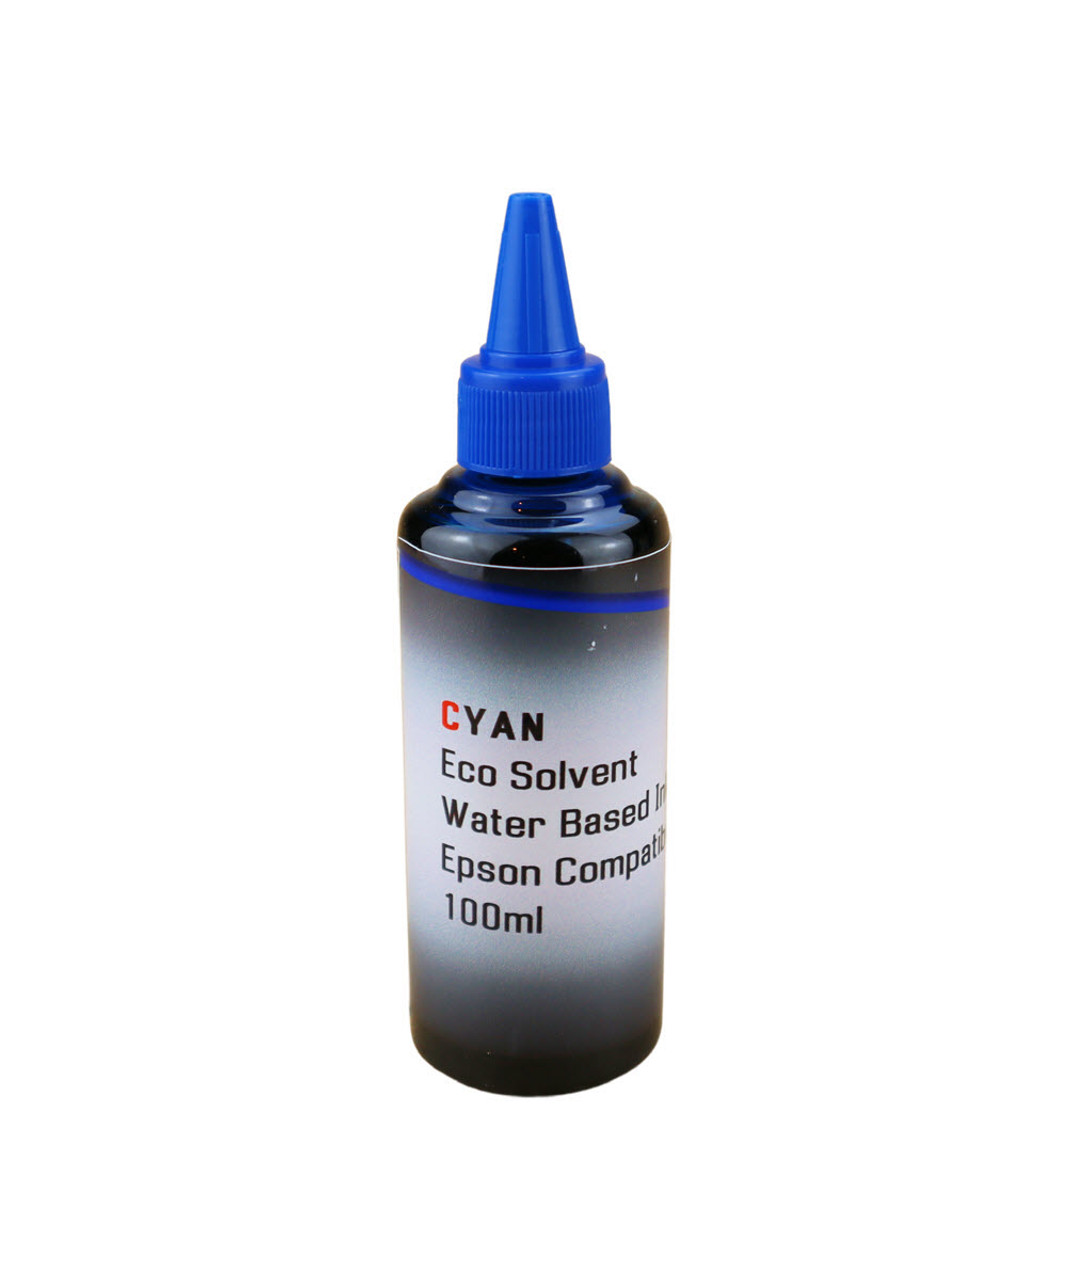 Cyan Water Based Eco Solvent Ink 100ml Bottle for WorkForce WF-7110 WF-7610 WF-7620 Printers